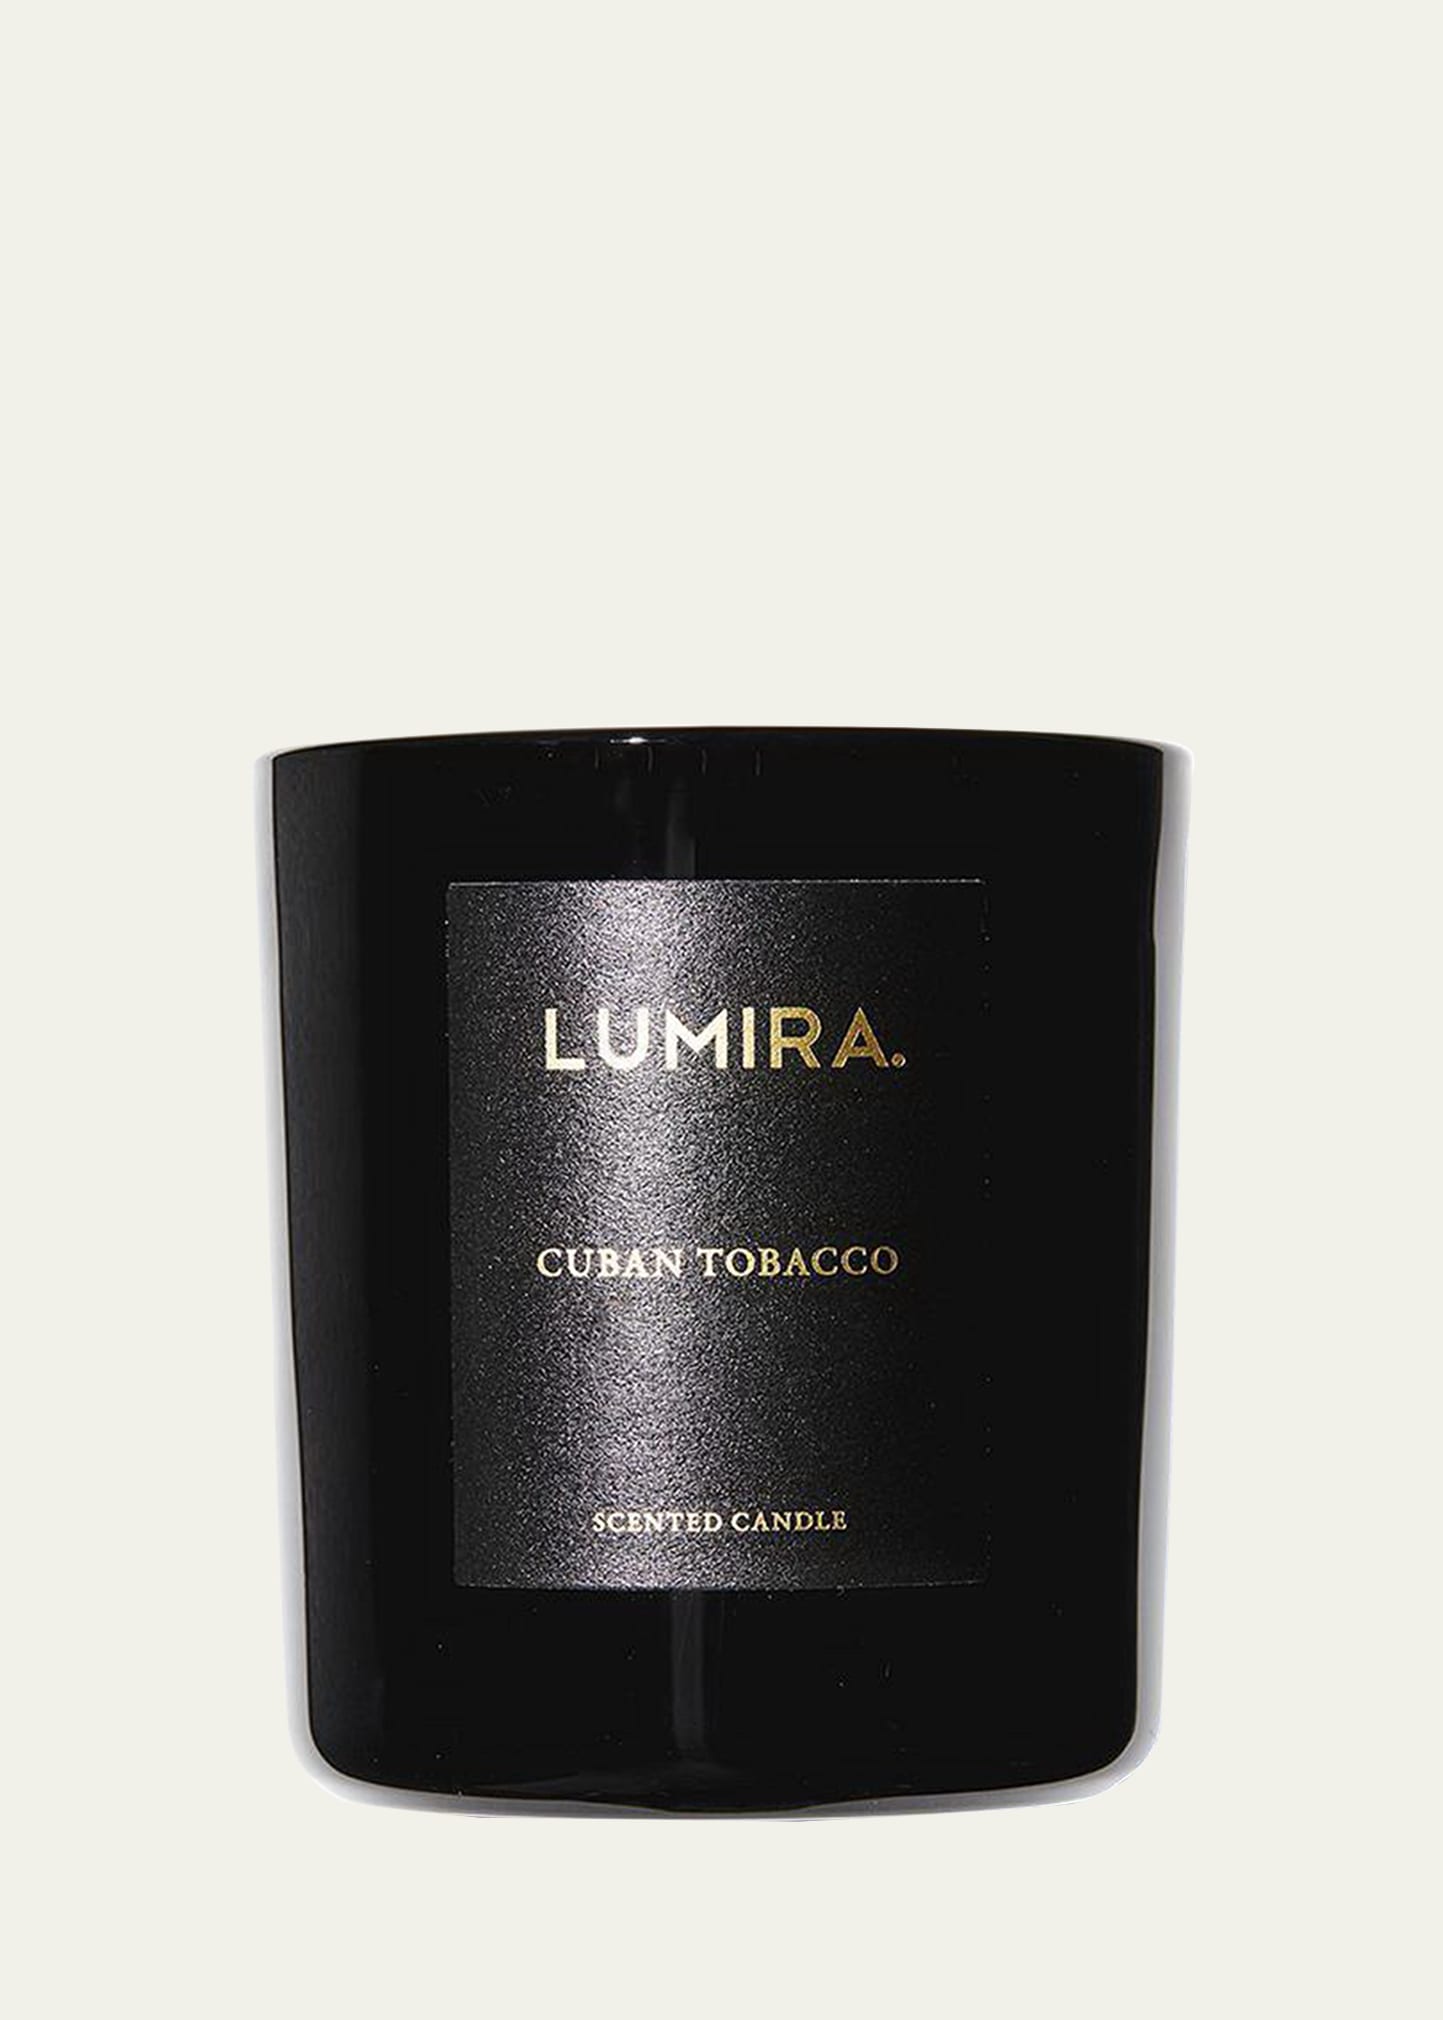 Lumira Cuban Tobacco Candle, 10.5 Oz.